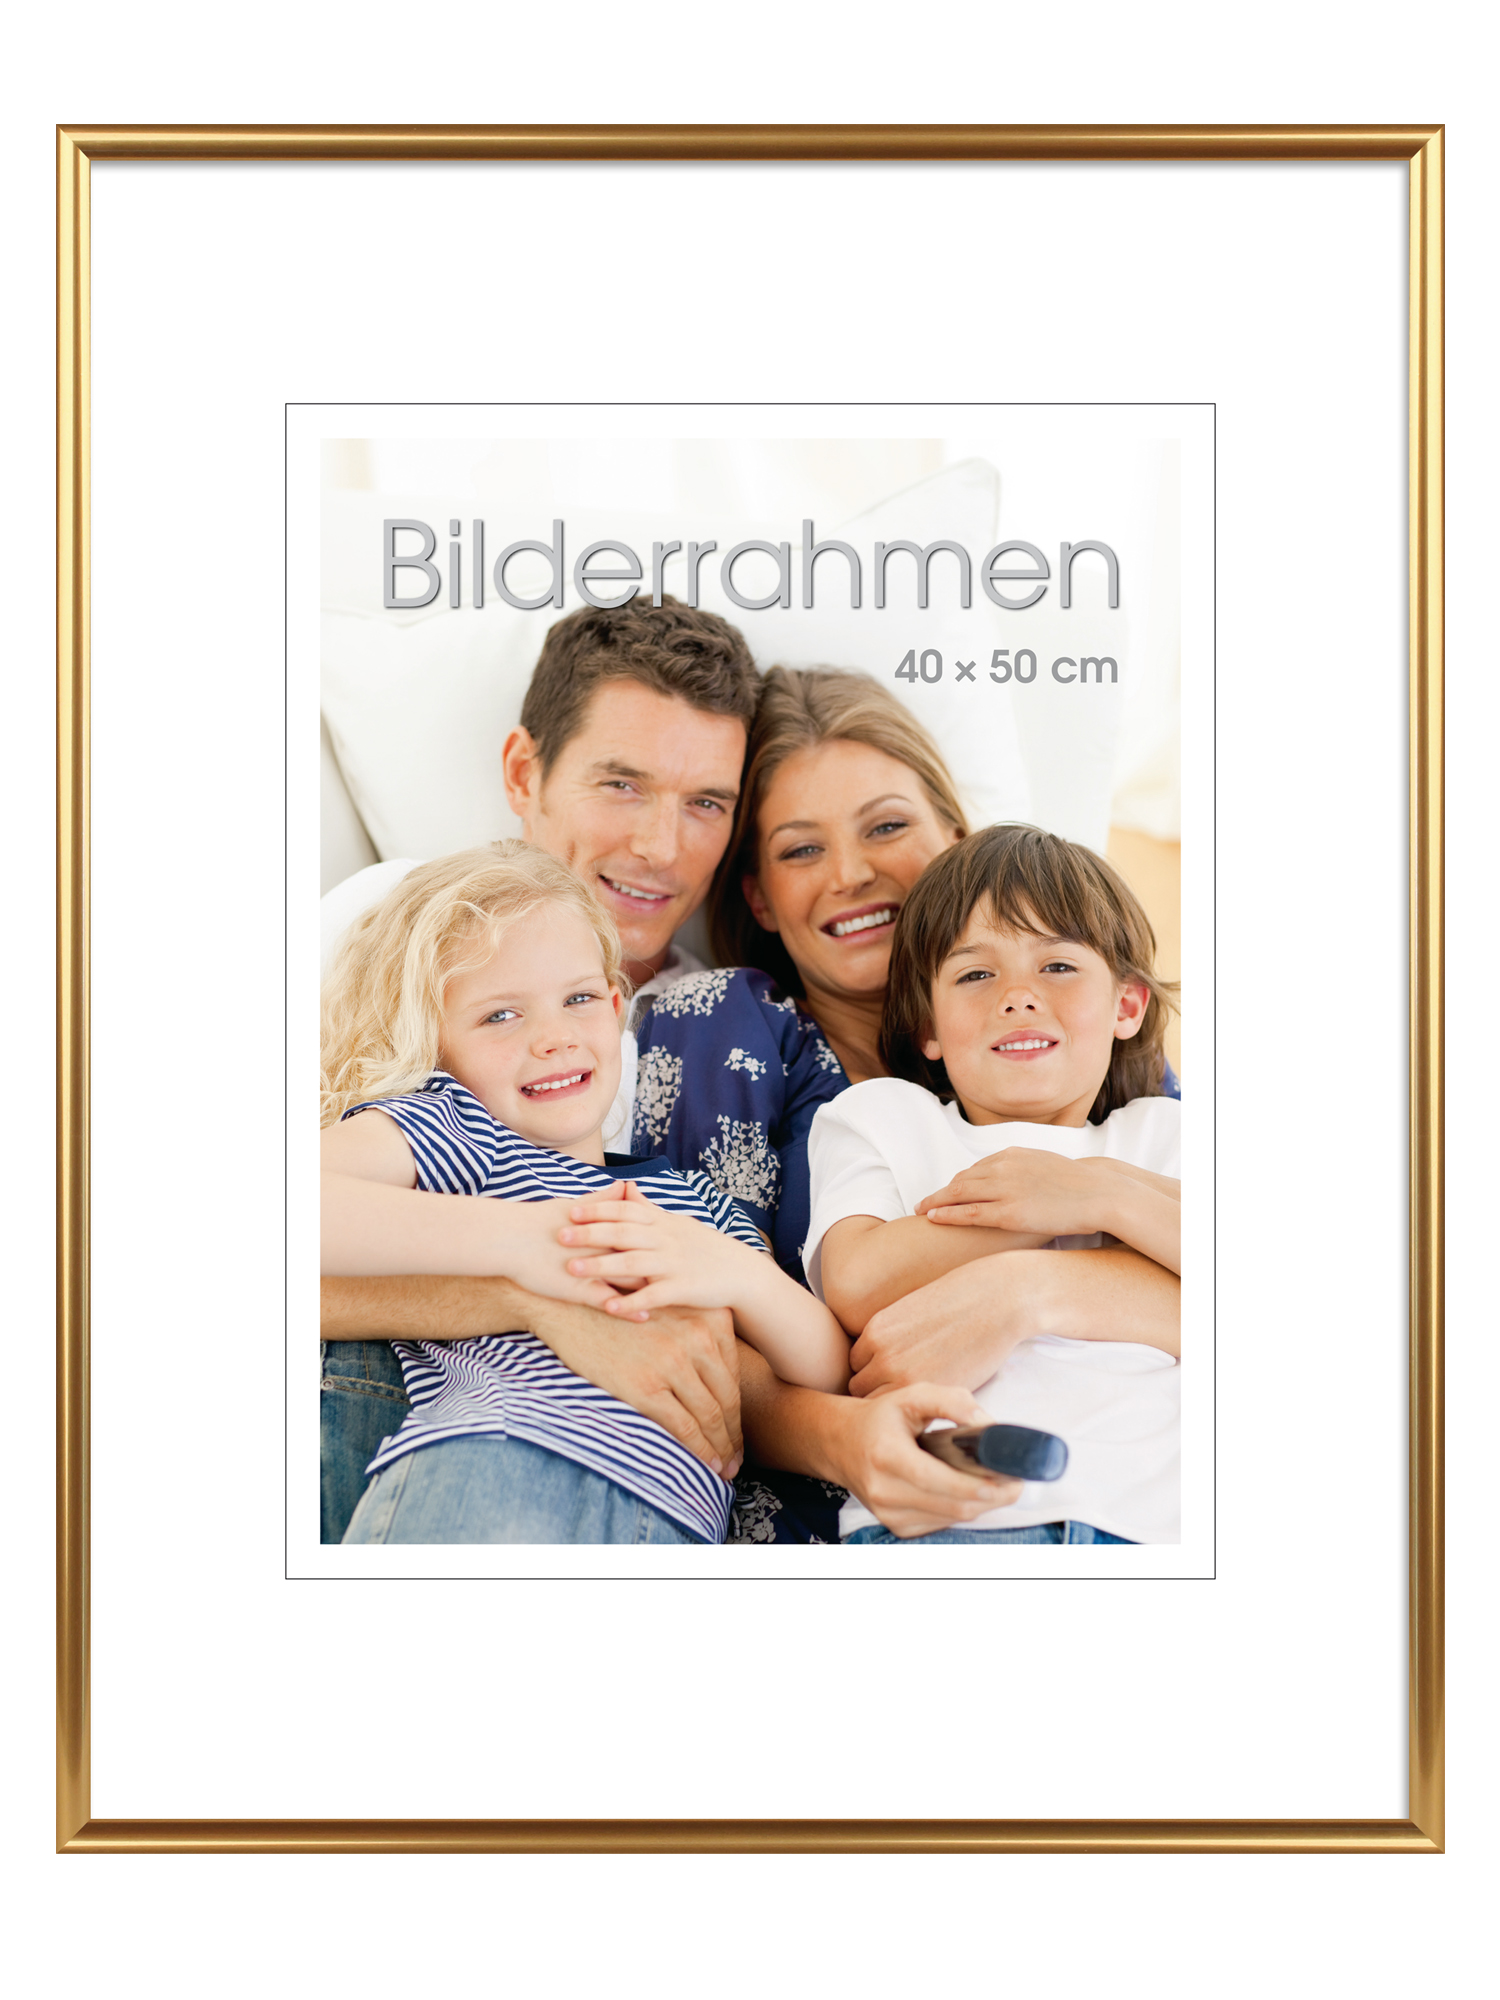 INTERTRADING Bilderrahmen 40 x 50 cm gold